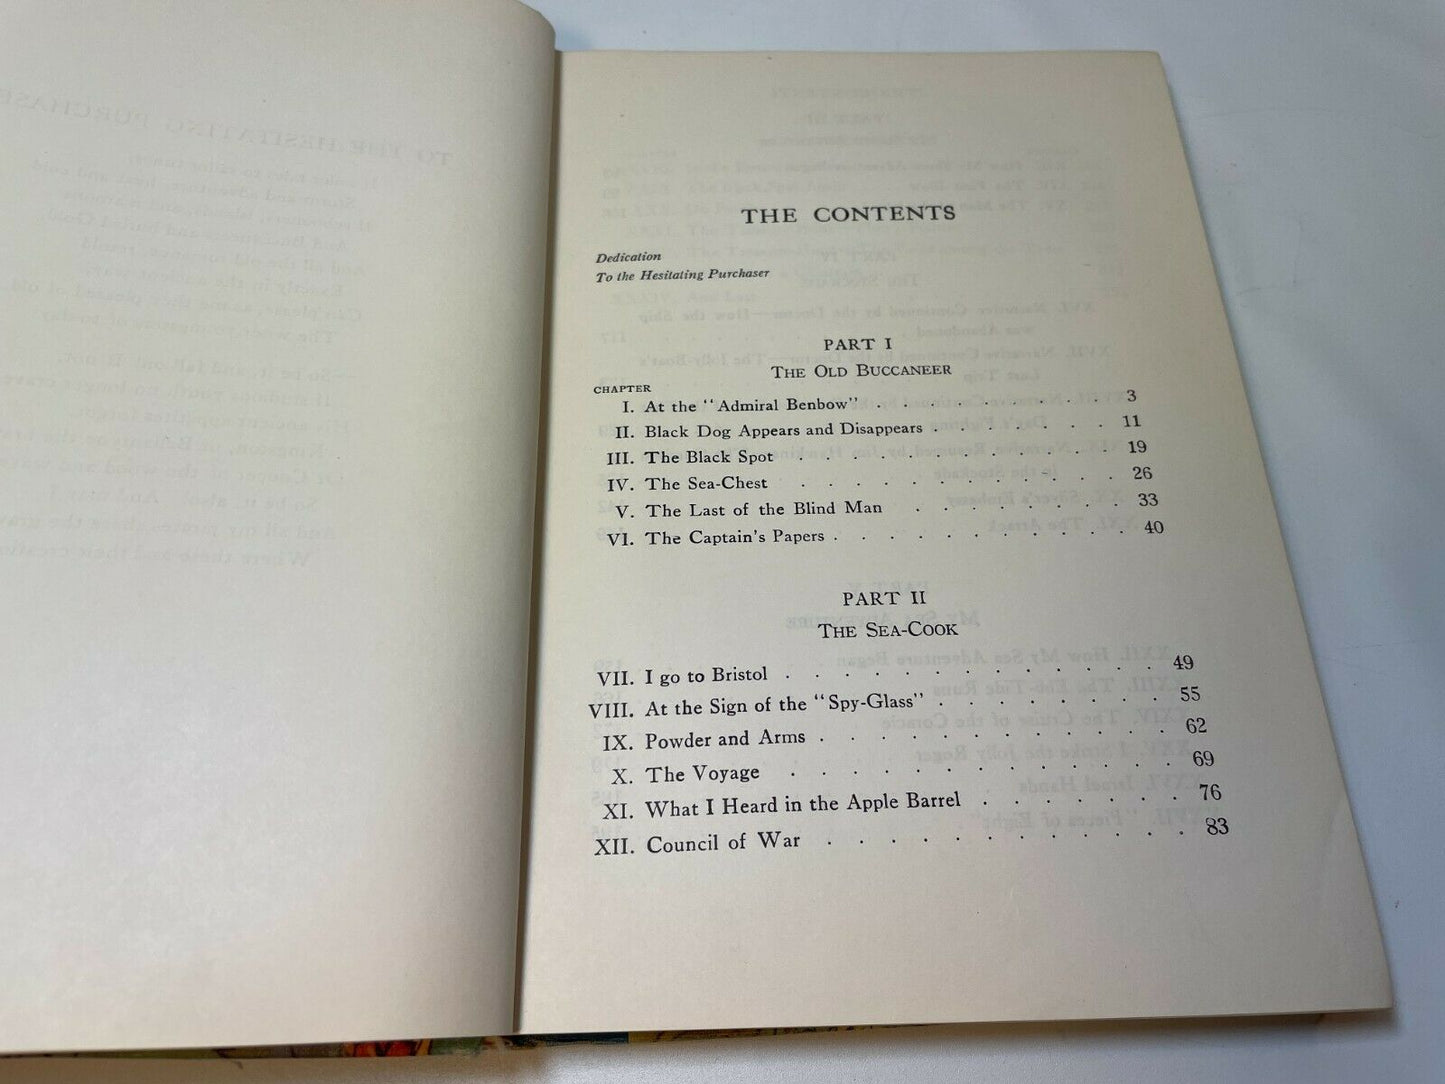 Treasure Island, Windermere Readers, Robert Louis Stevenson, 1955 HC (B3)